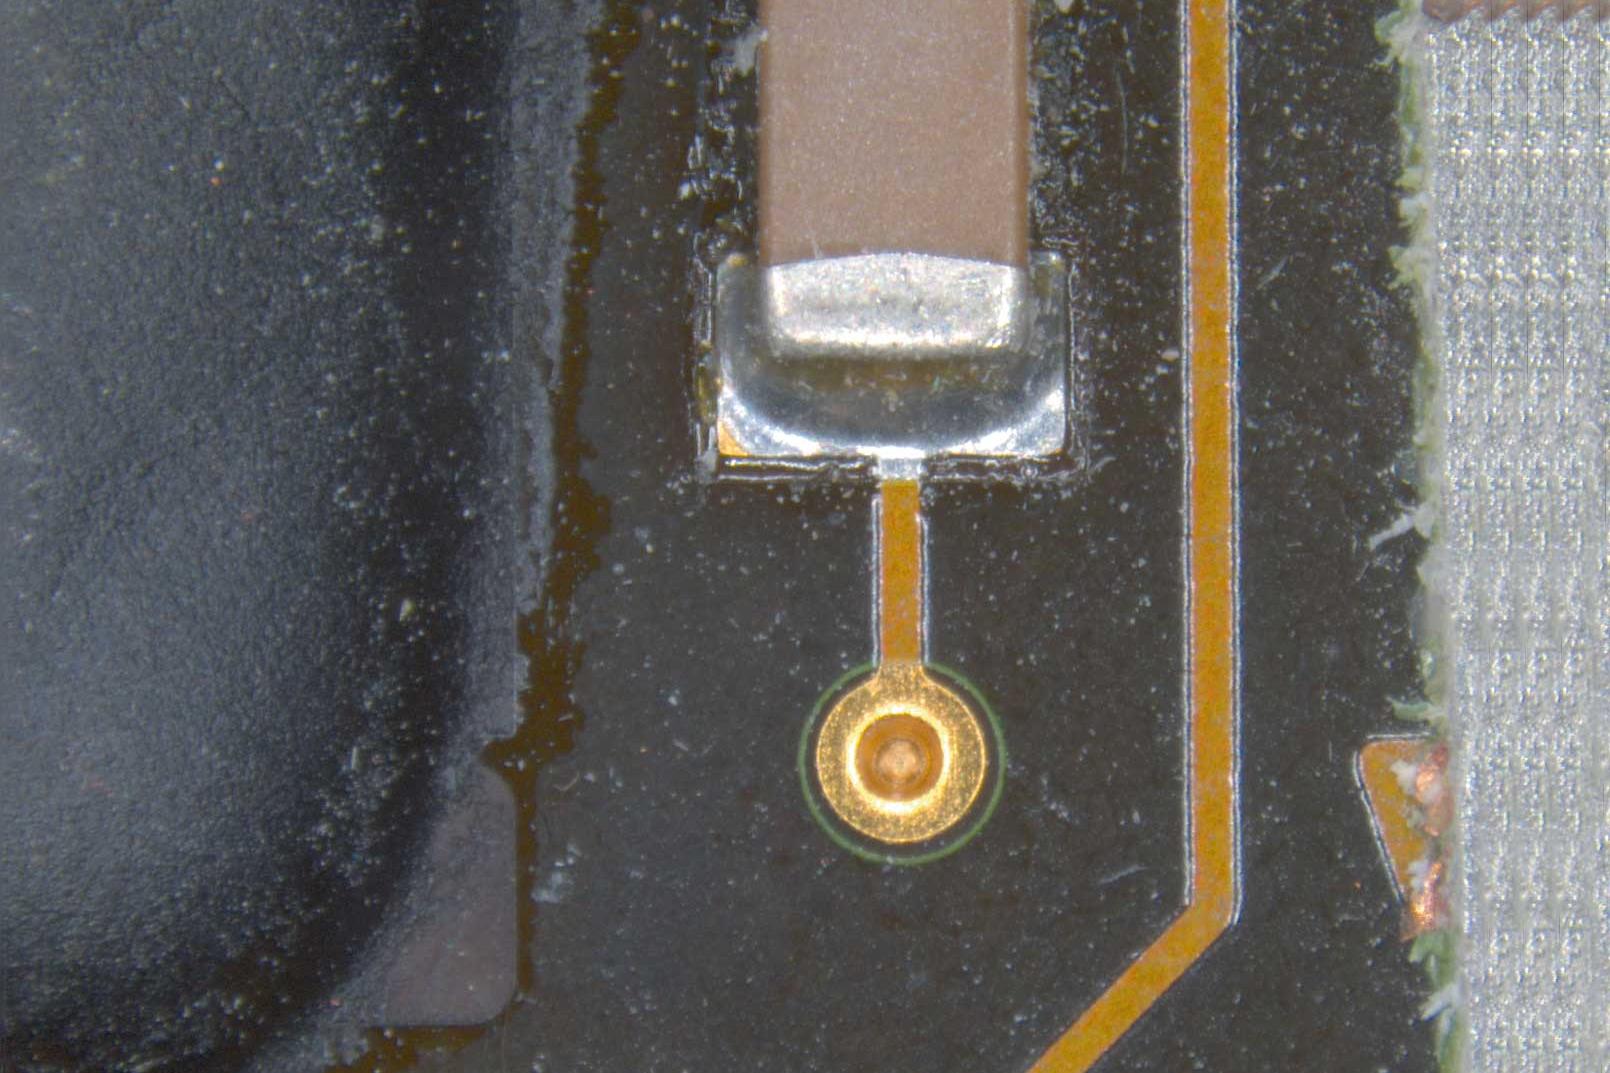 Componente de placa de circuitos impresos, campo oscuro de luz reflejada, aumento: 7,5x​